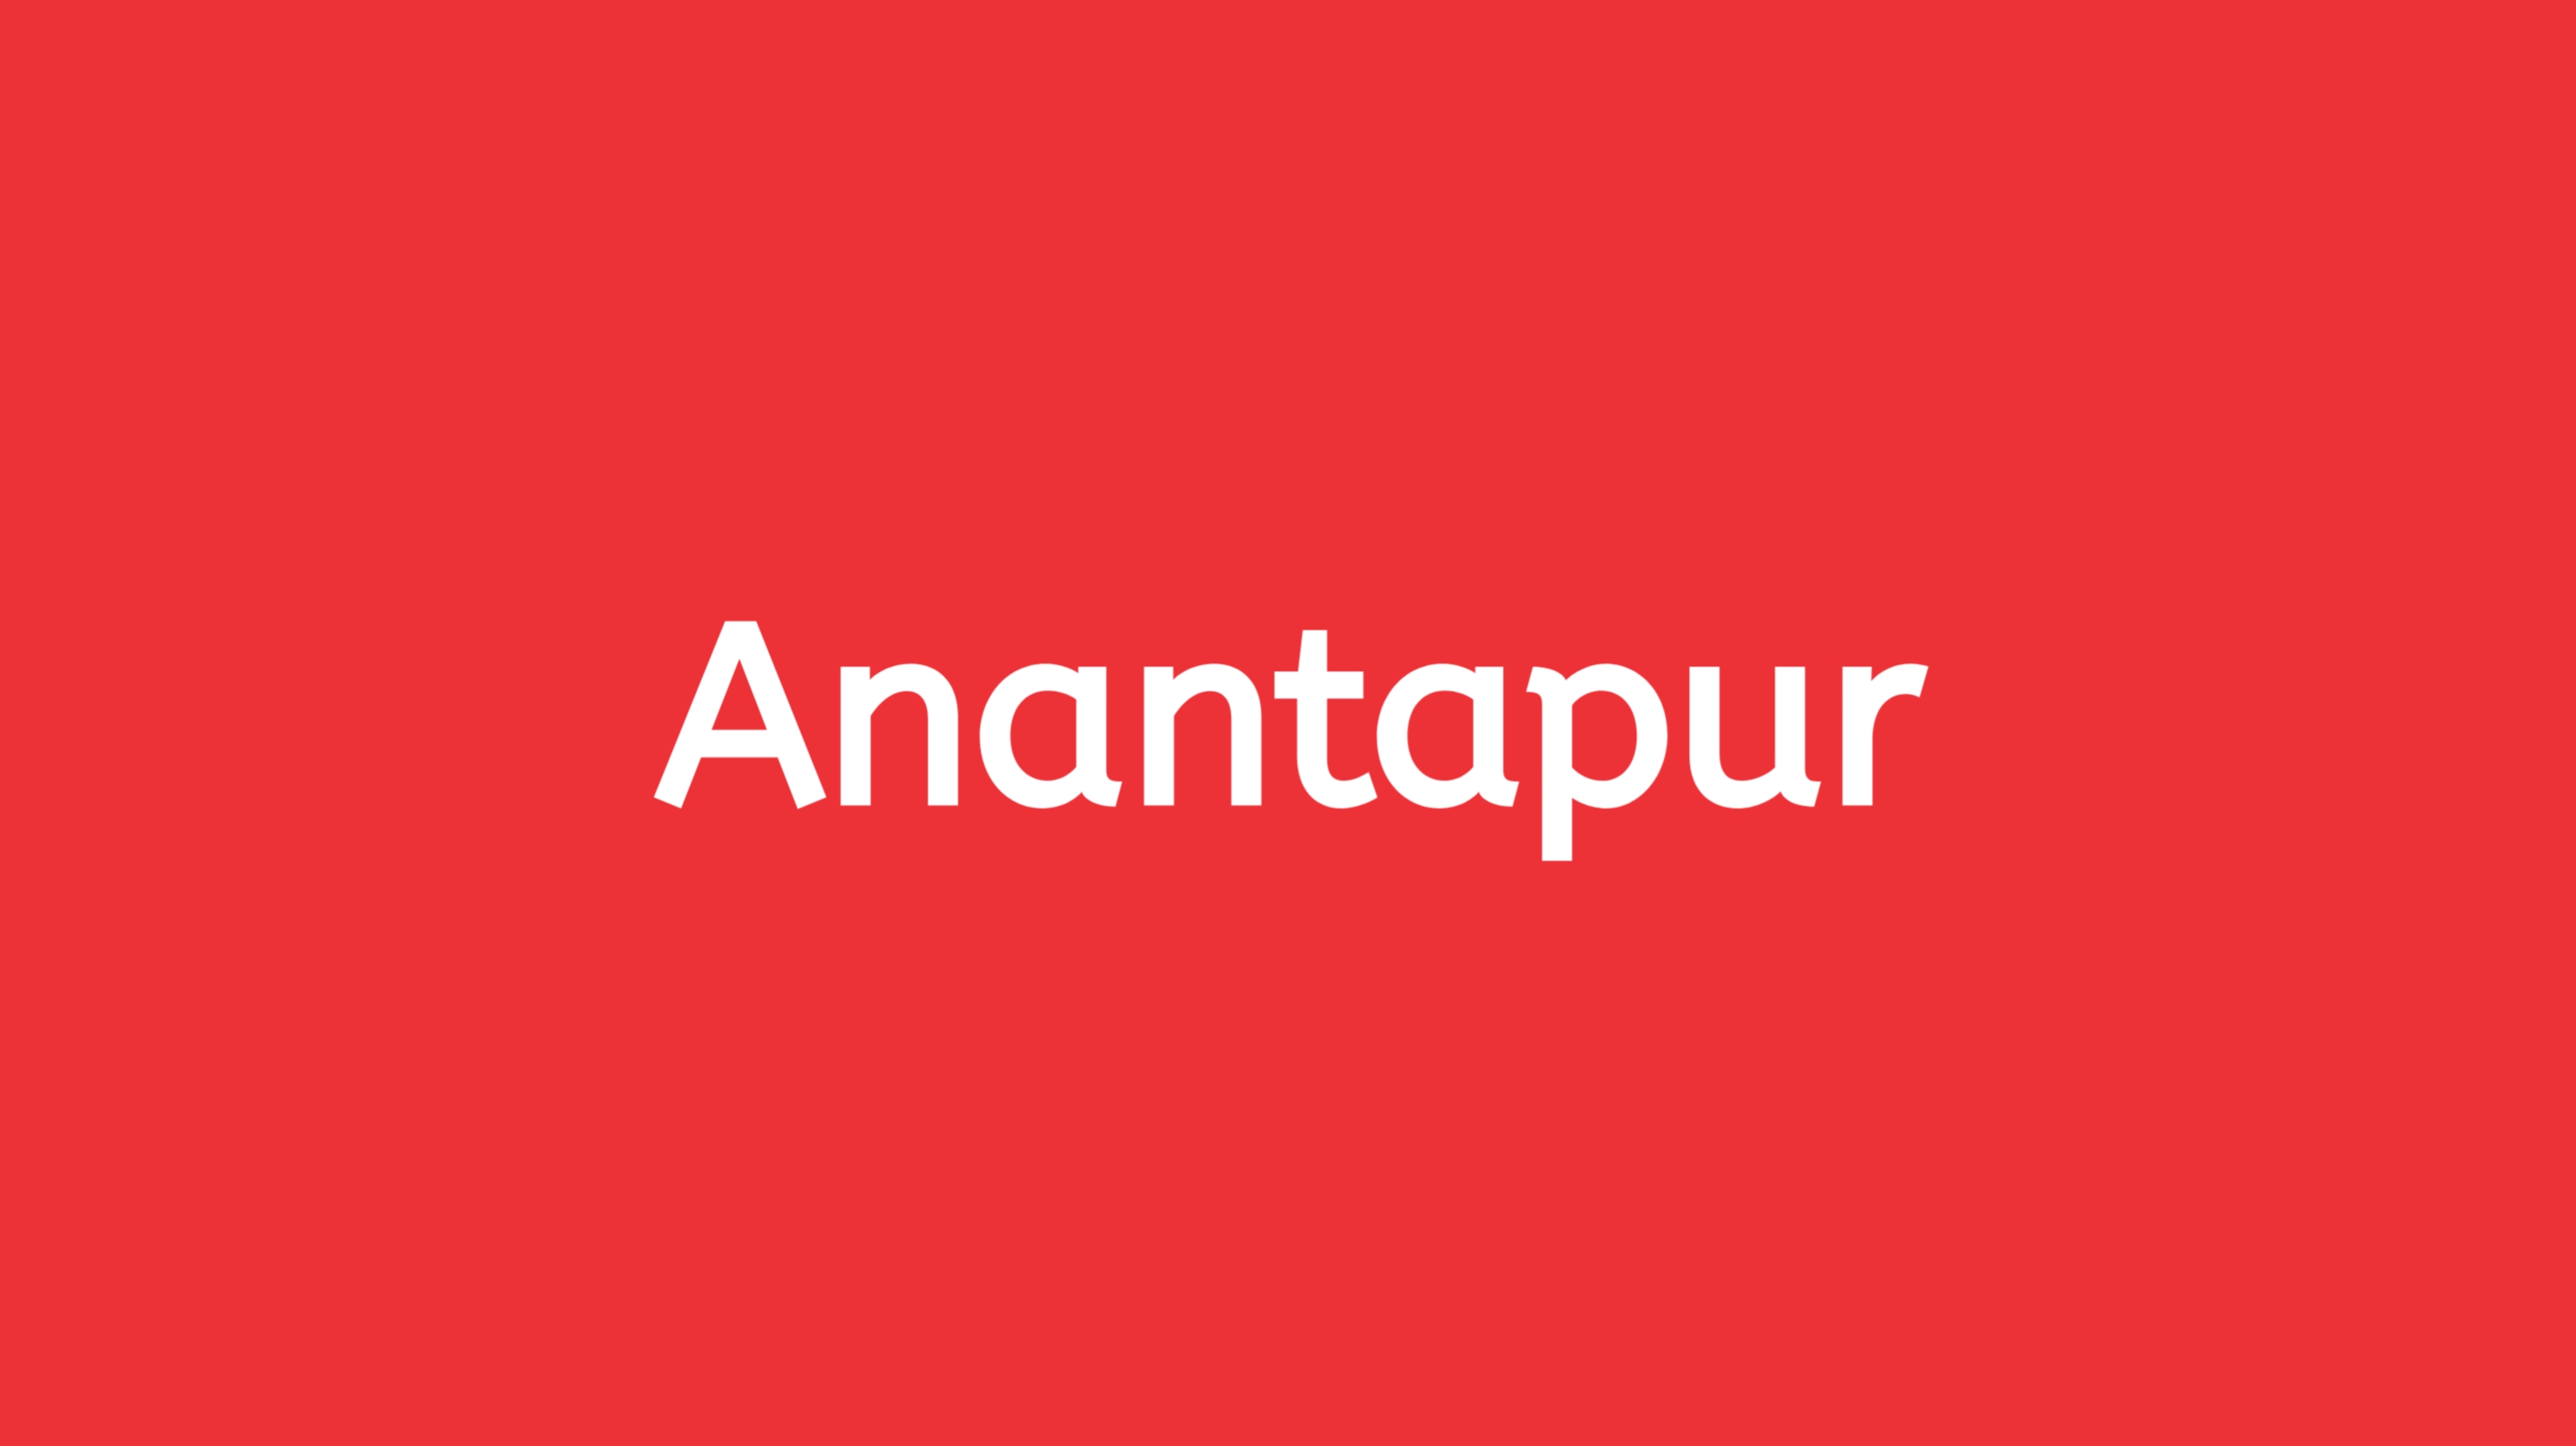 StayFit - Anatapur